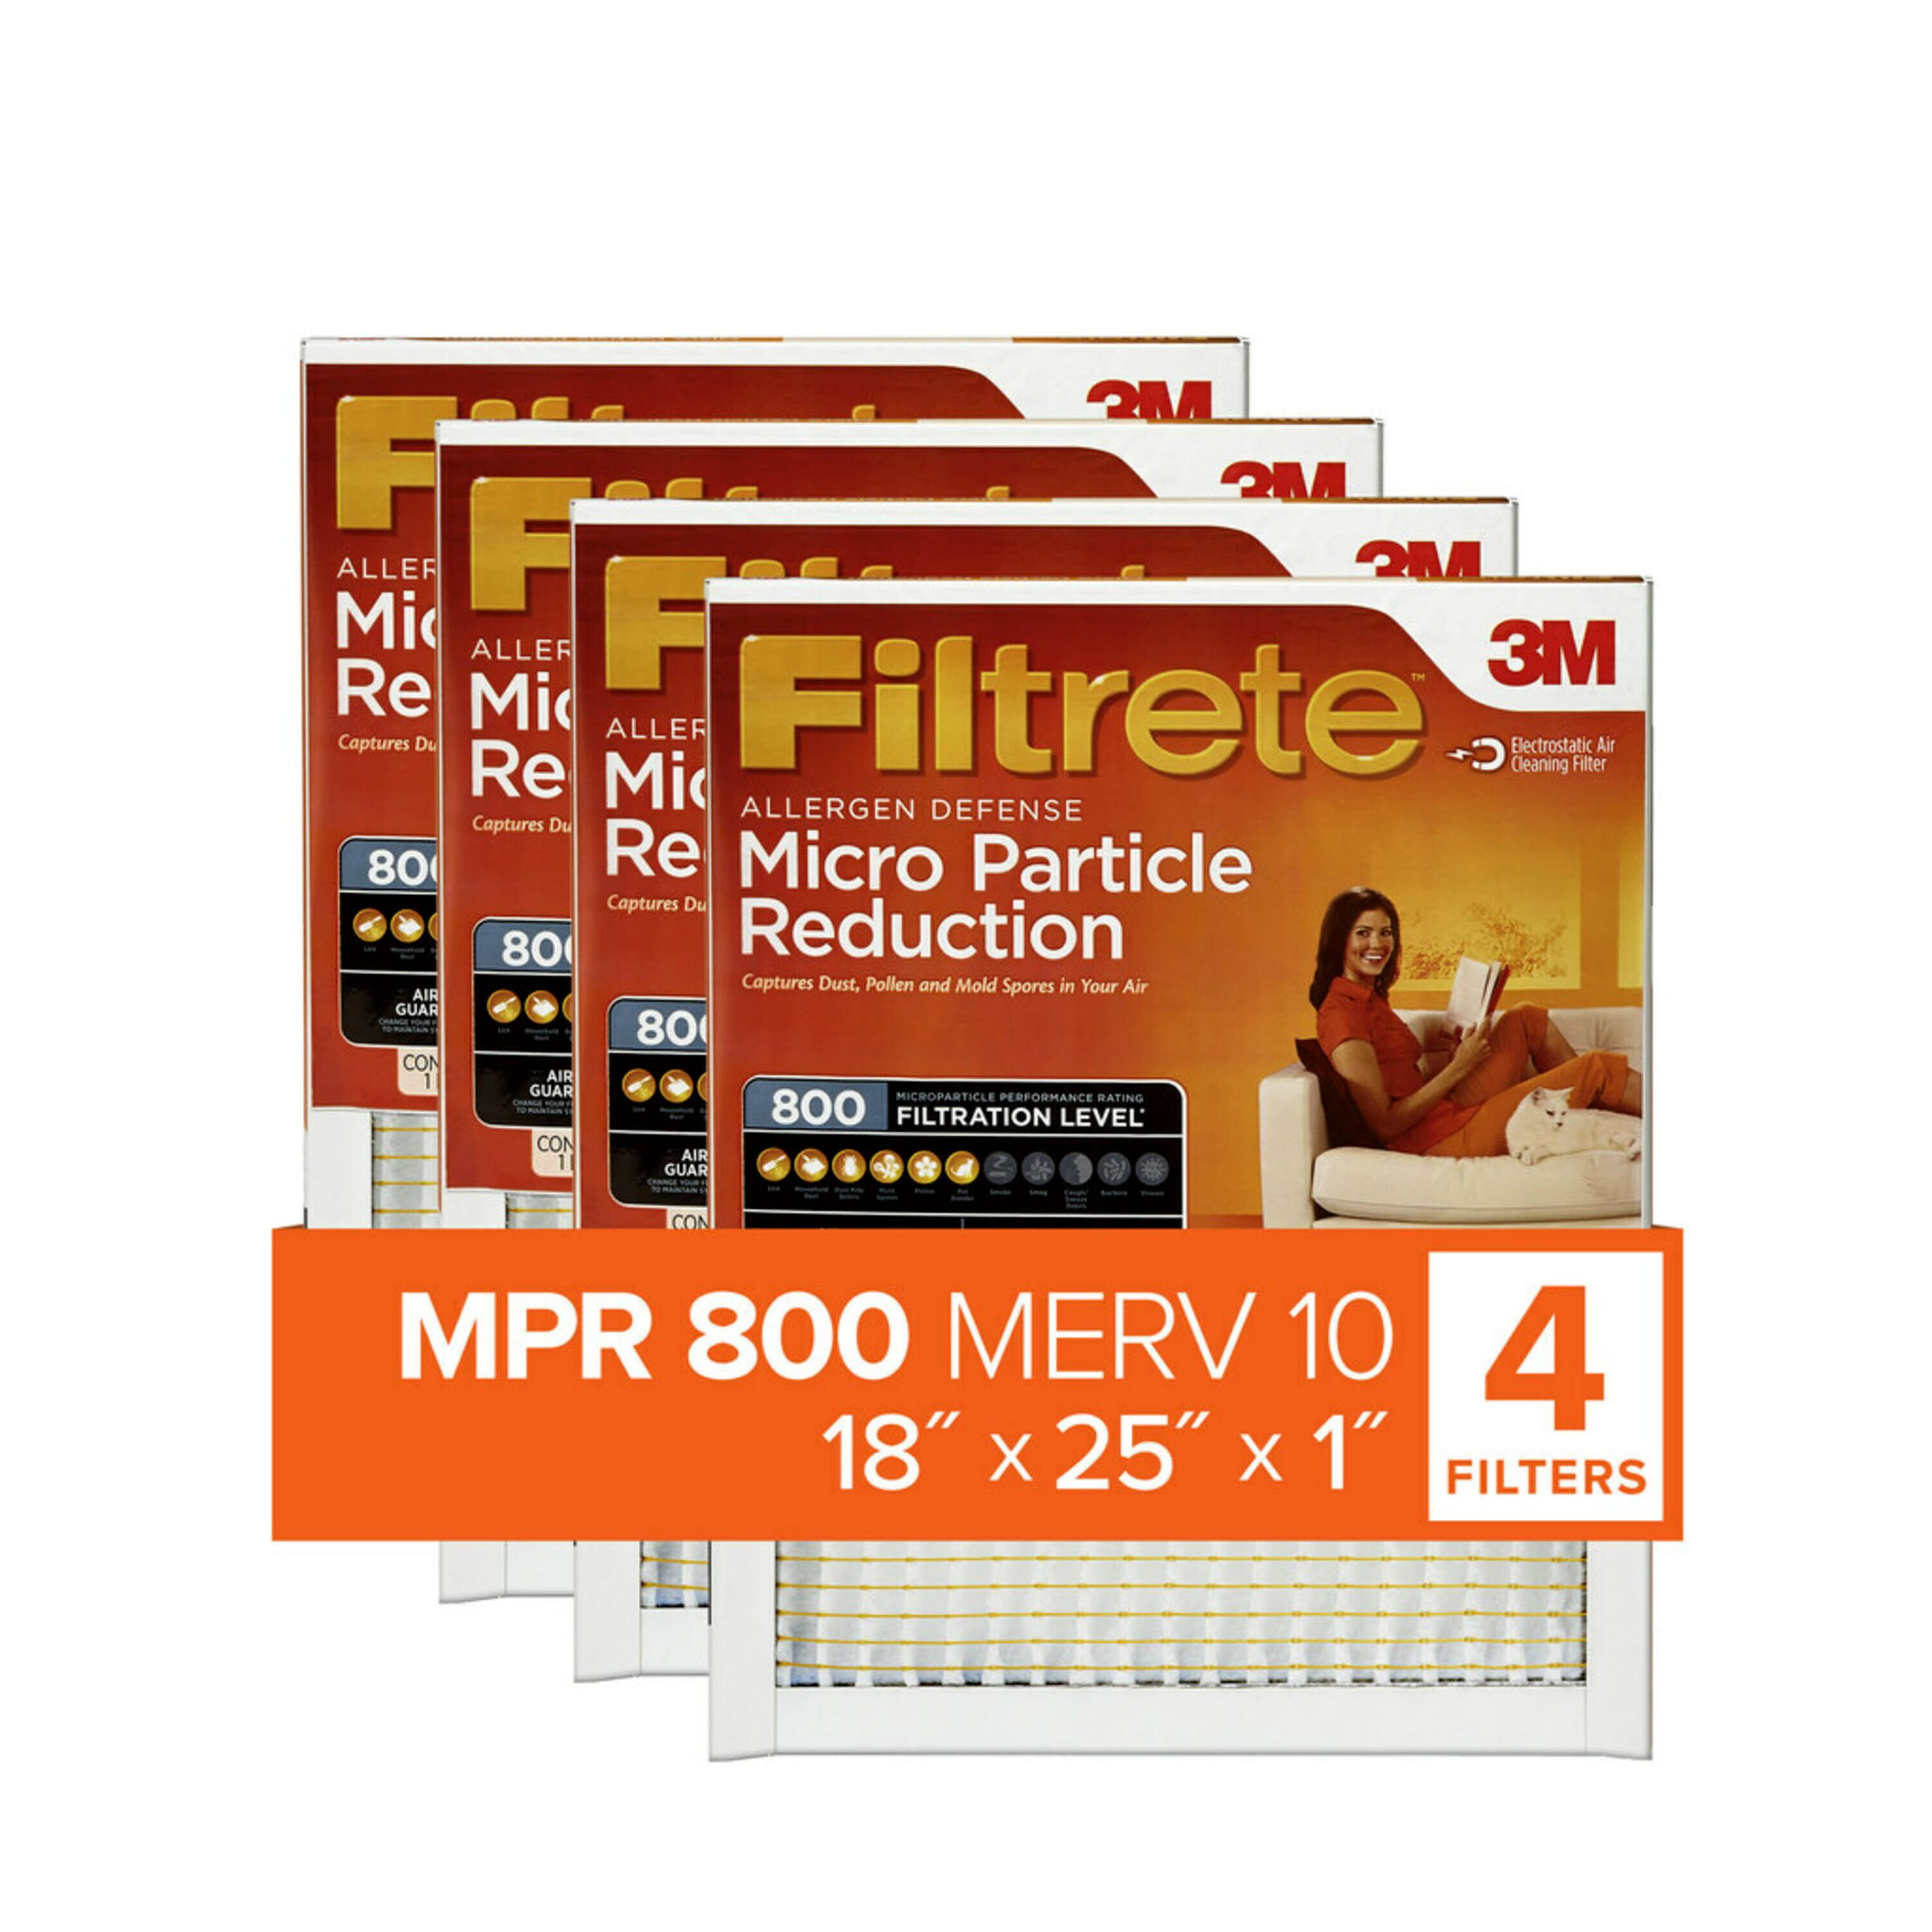 filtrete-18x25x1-allergen-defense-micro-particle-reduction-hvac